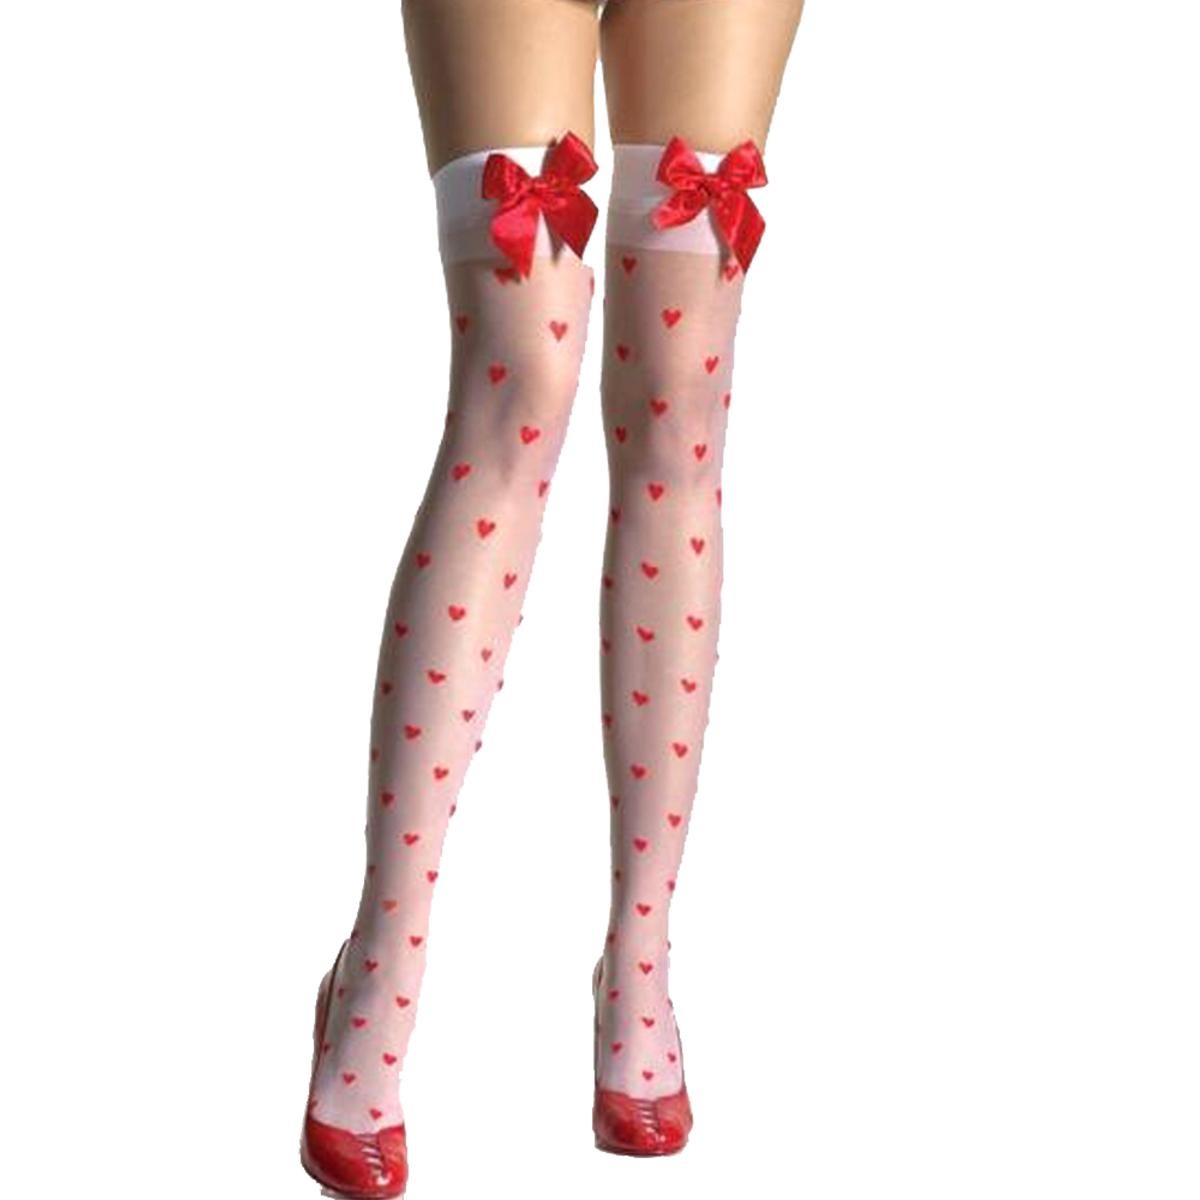  Beautys  Love  -  Stockings  mit  Herzmuster  -  weiß/rot 